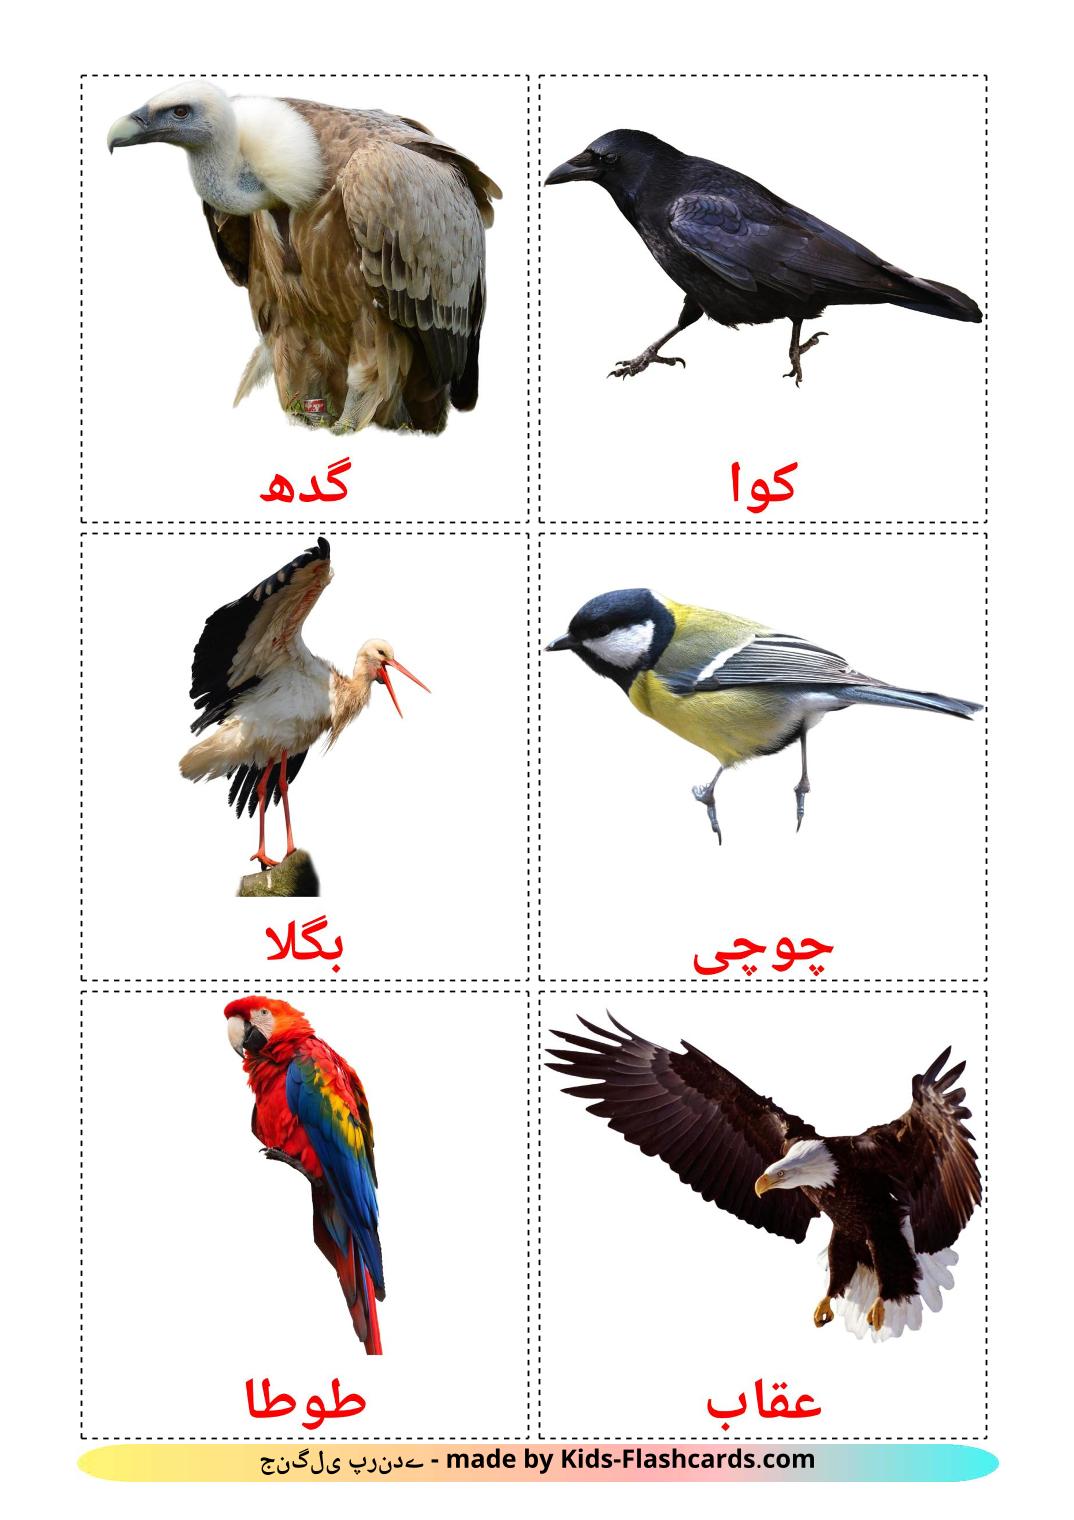 Pájaros salvajes - 18 fichas de urdu para imprimir gratis 